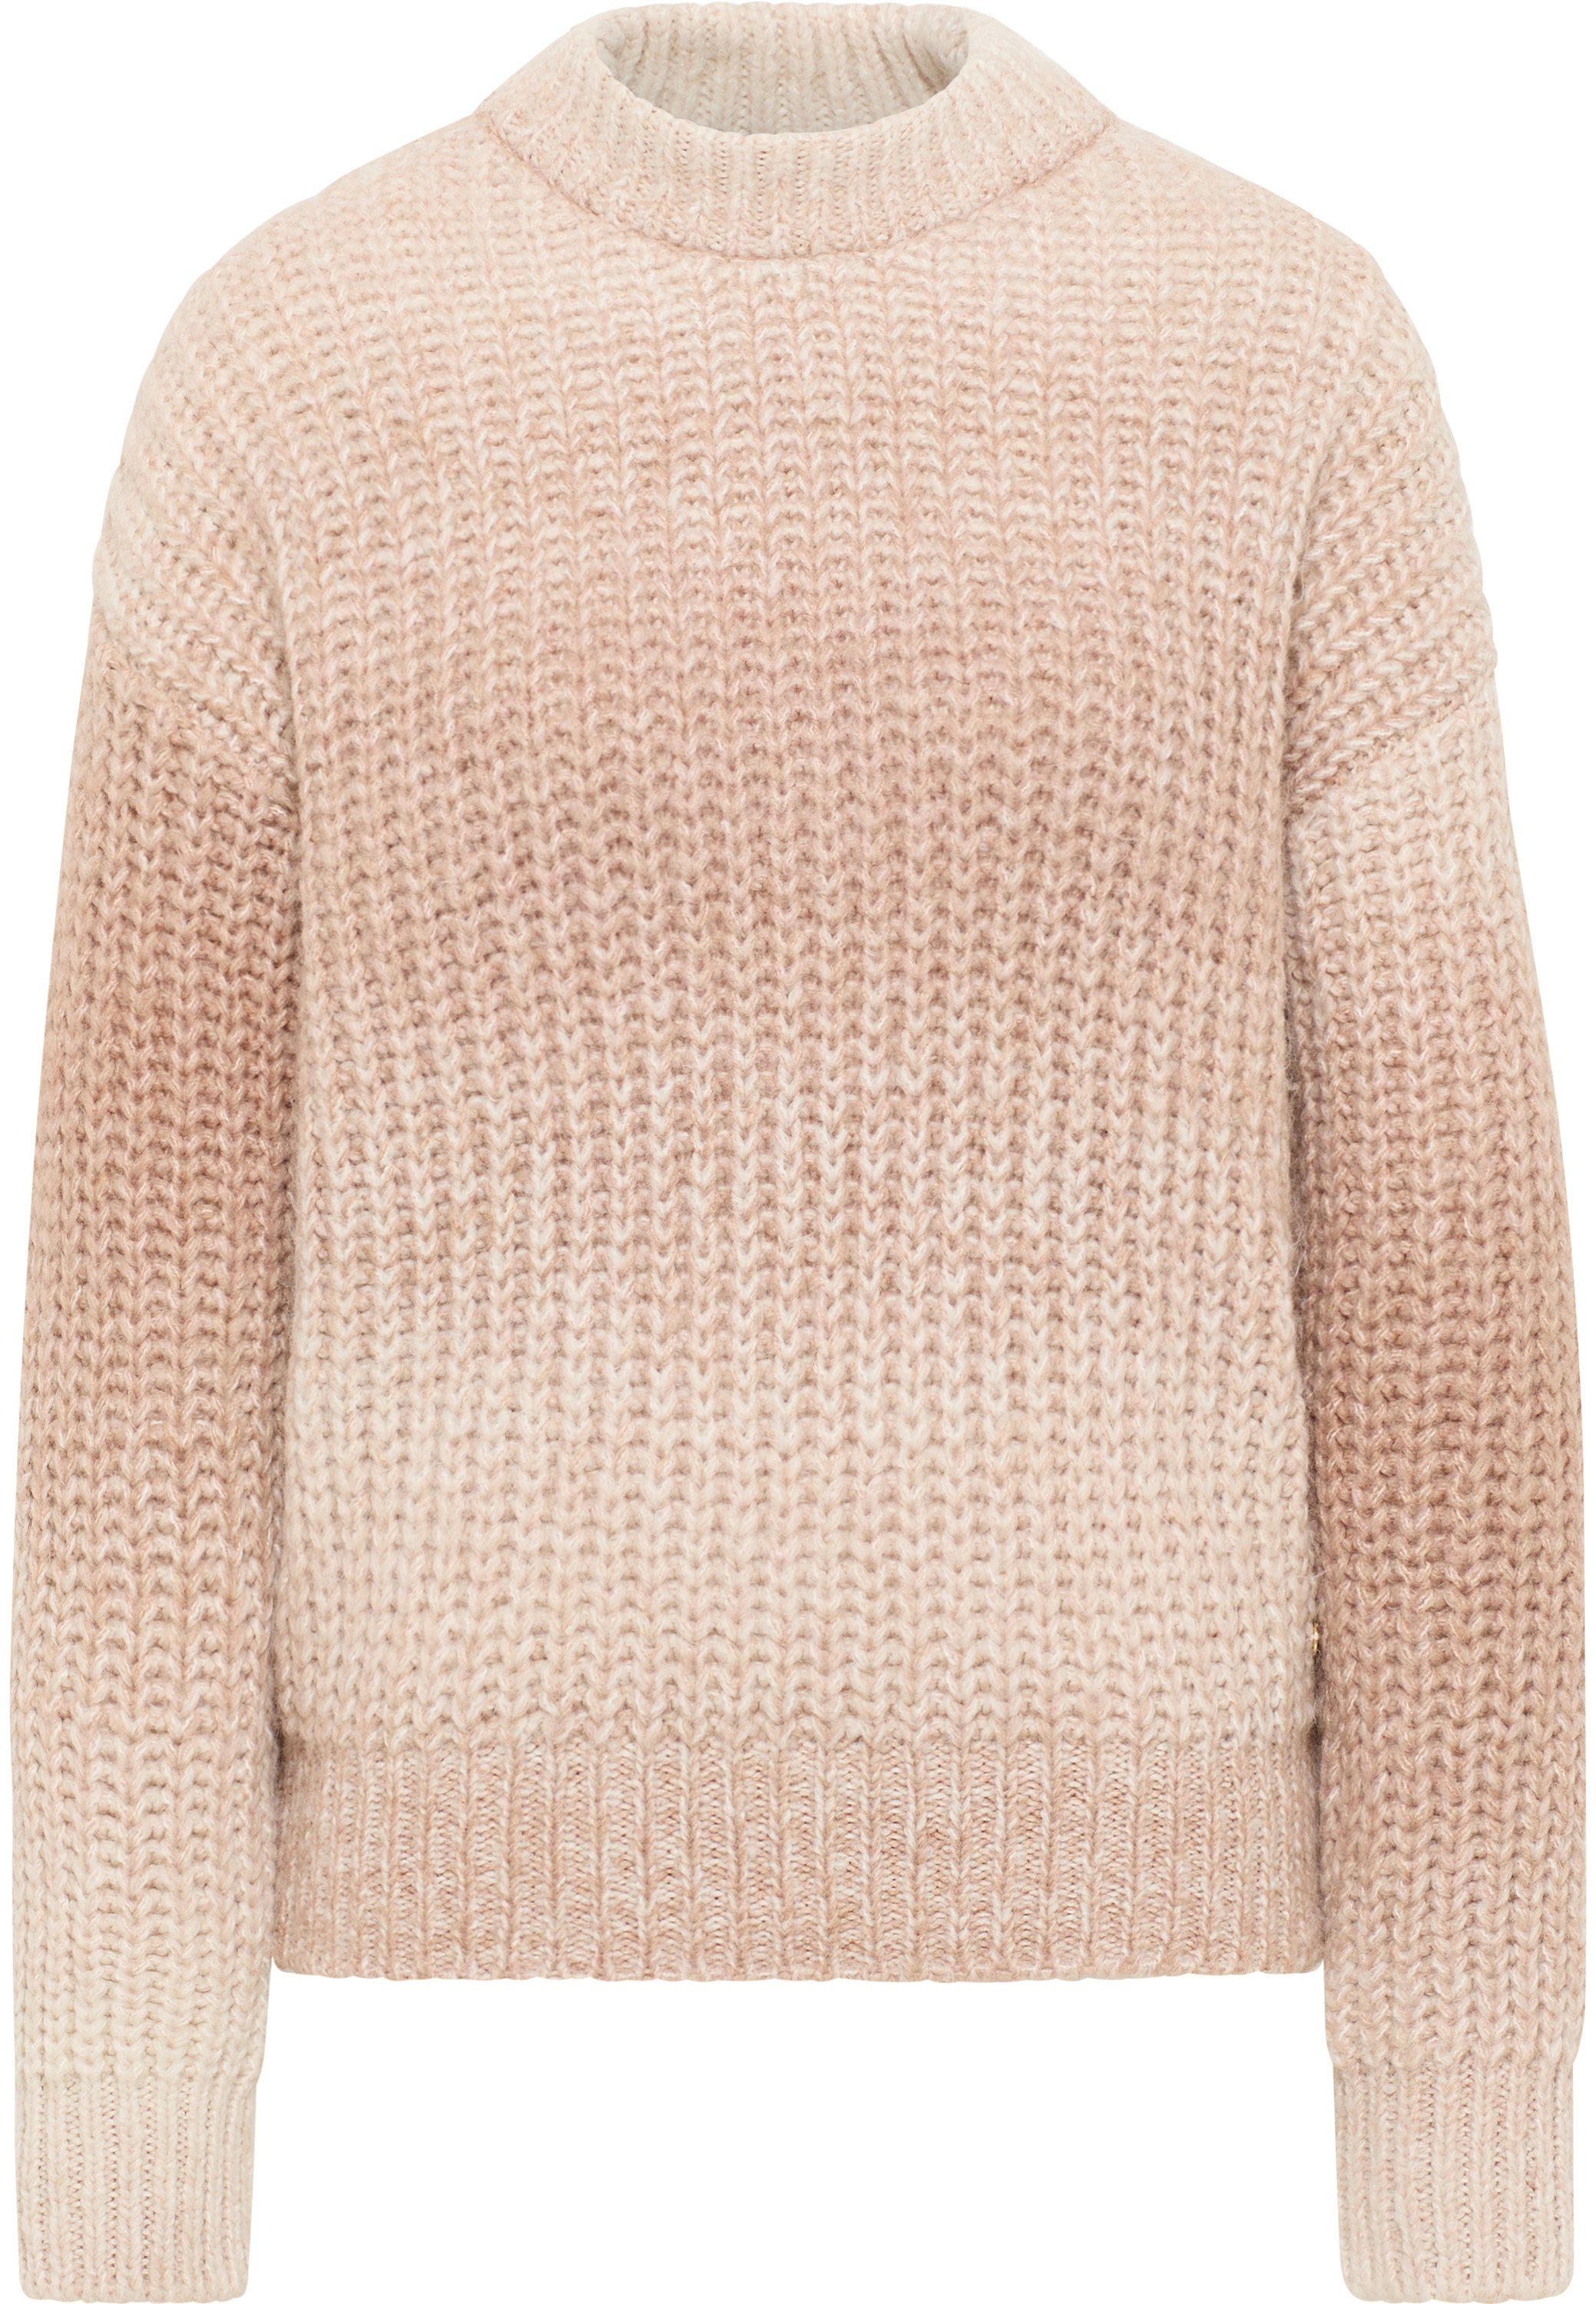 MUSTANG Sweater В'язані светри